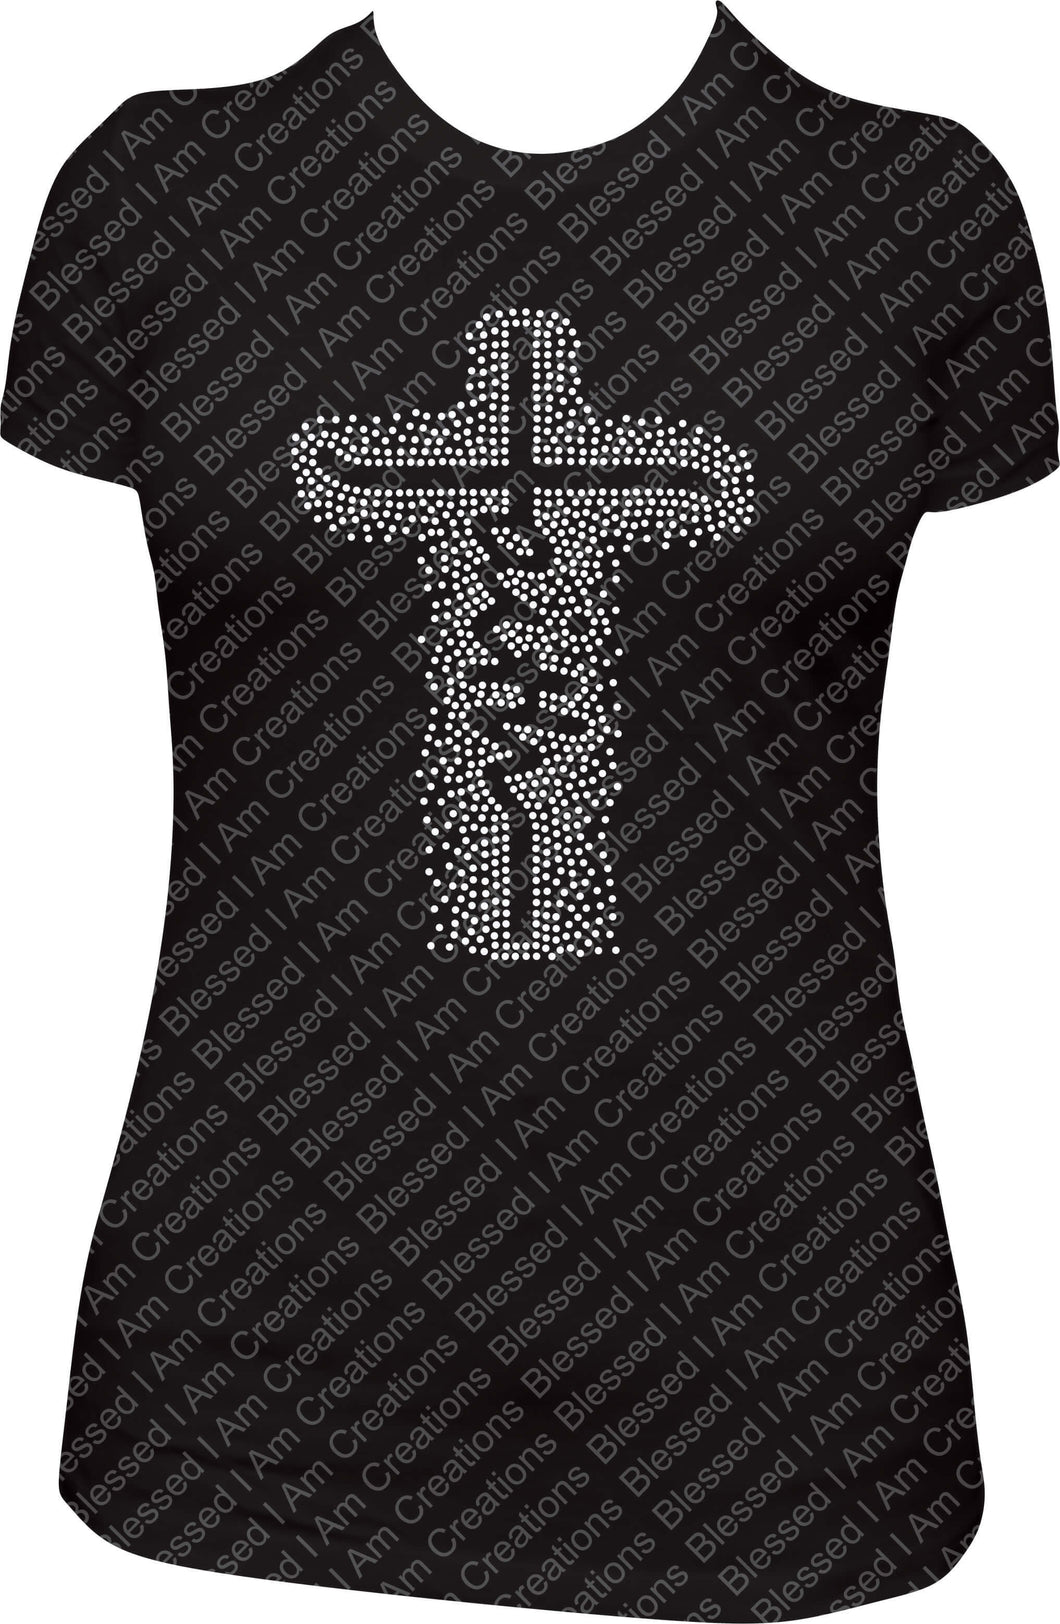 Faith Shirt Faith Christian Rhinestone Shirt